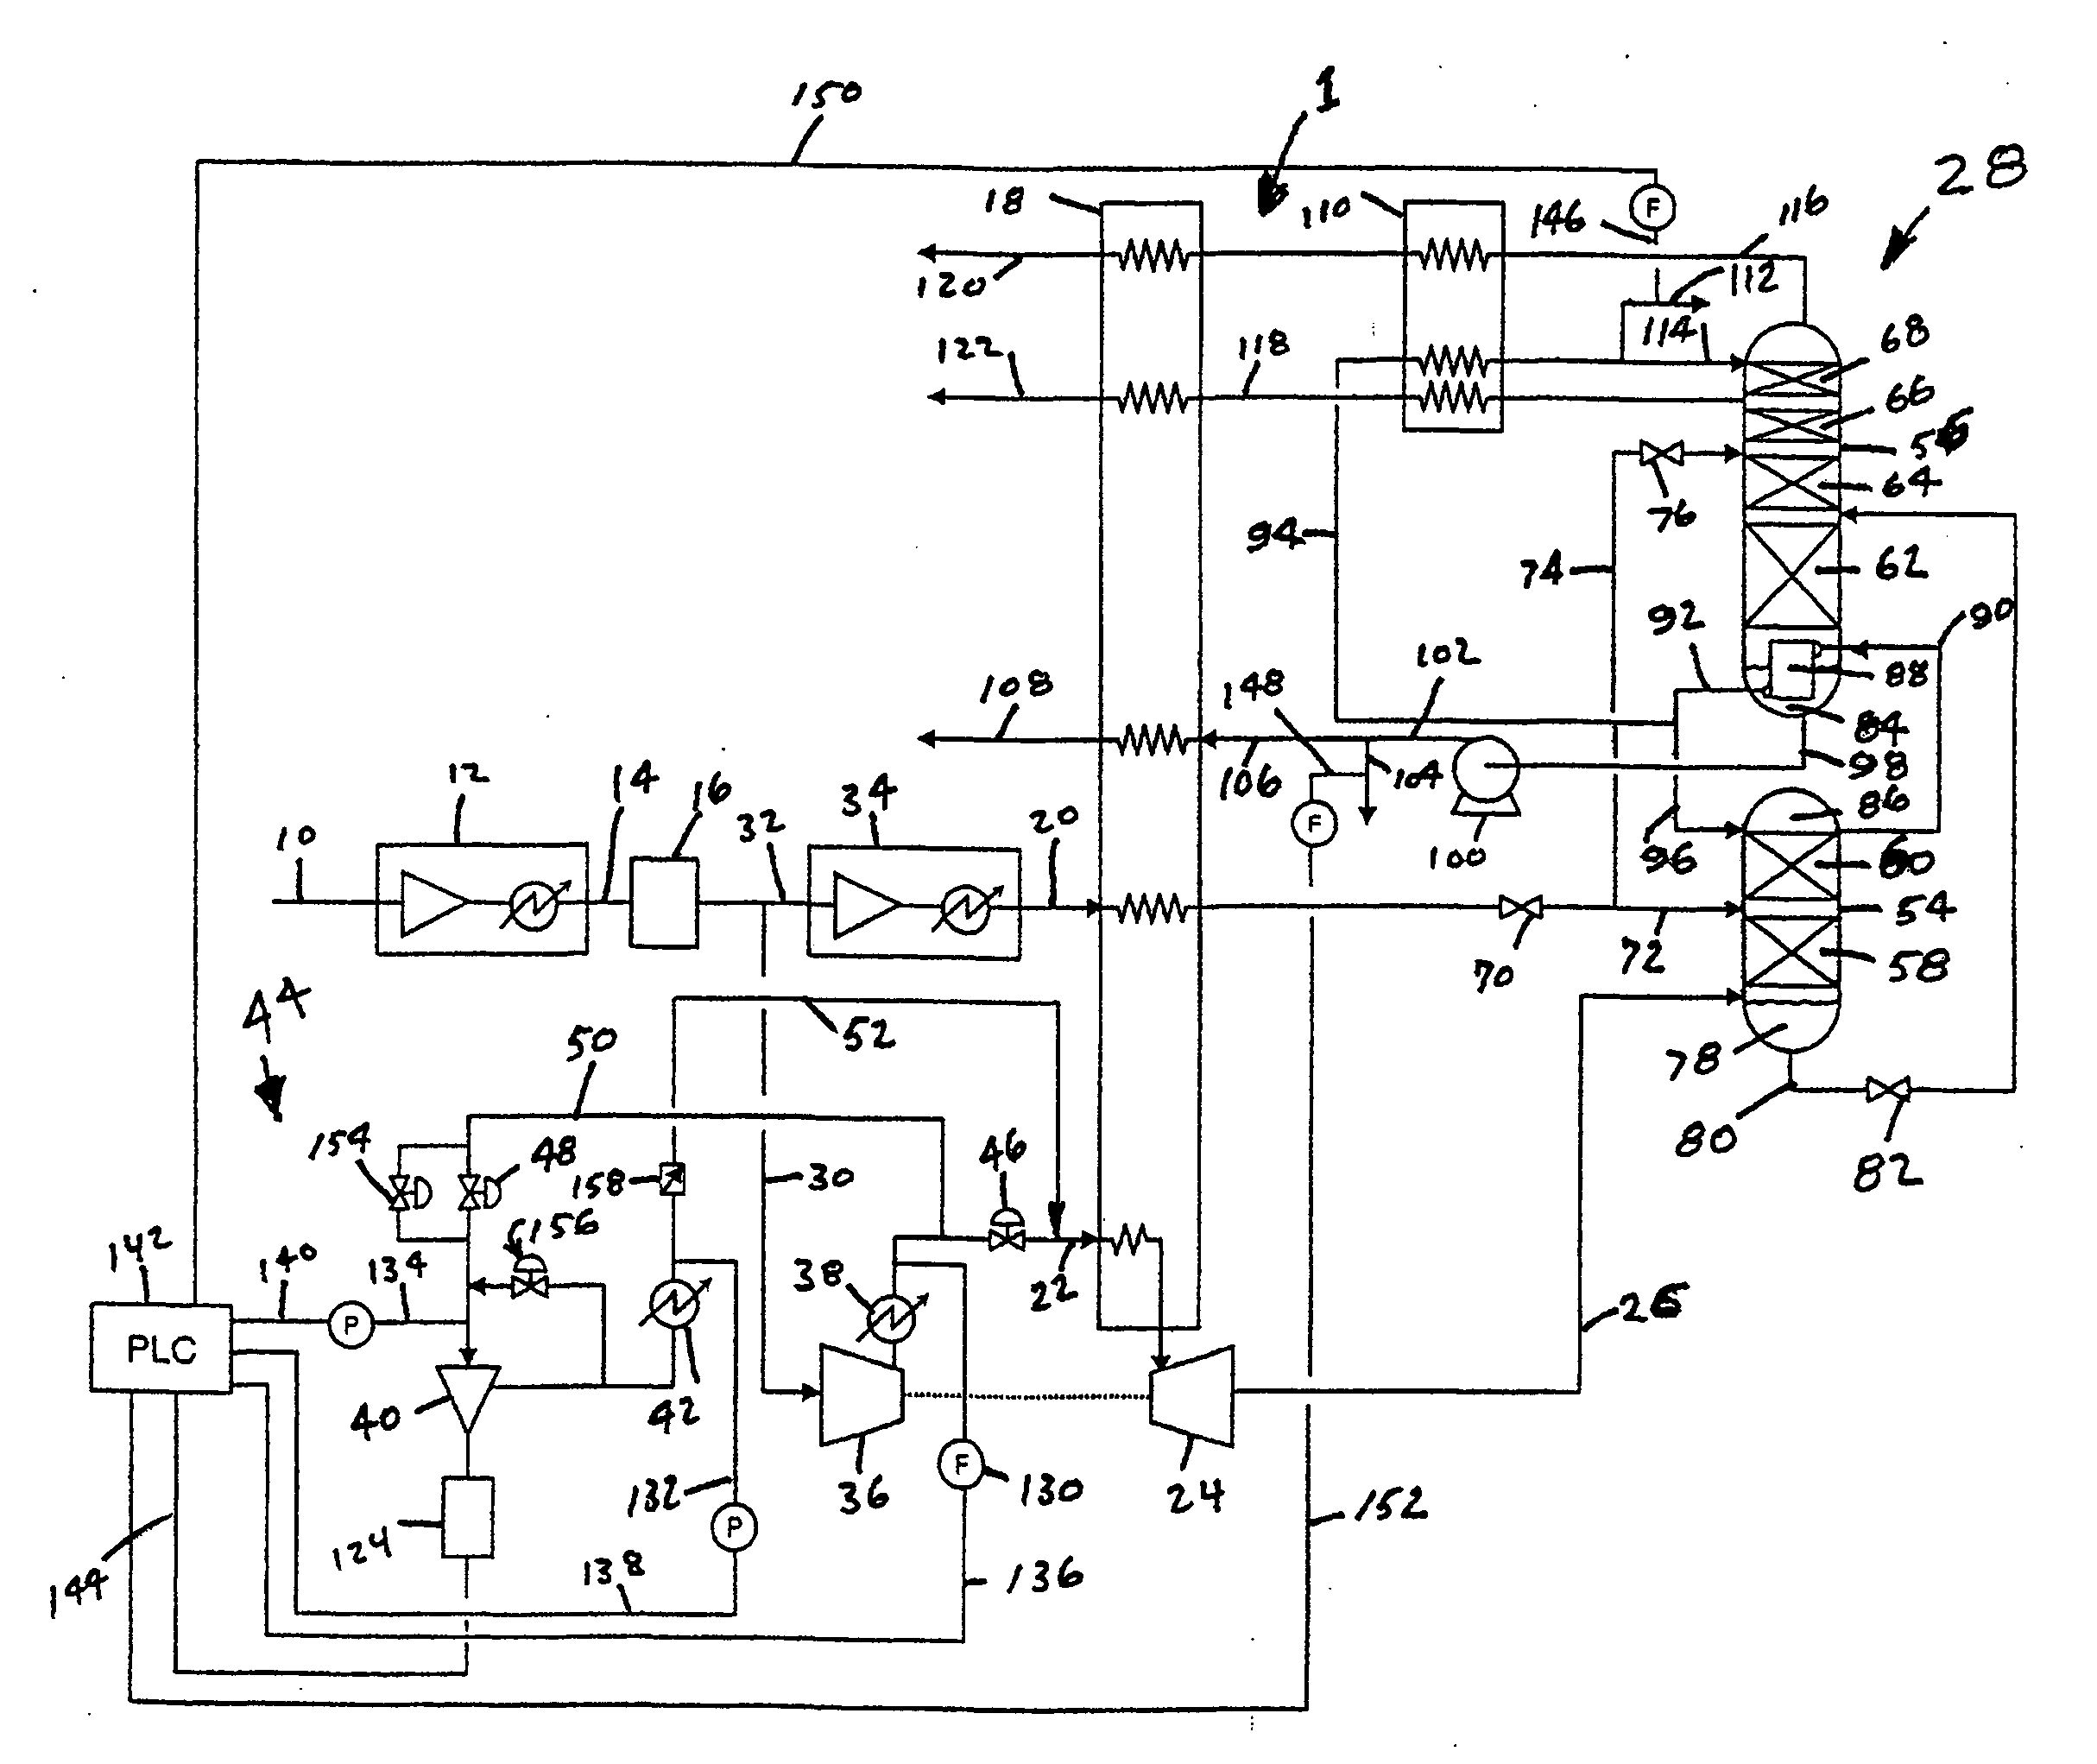 Distillation method and apparatus